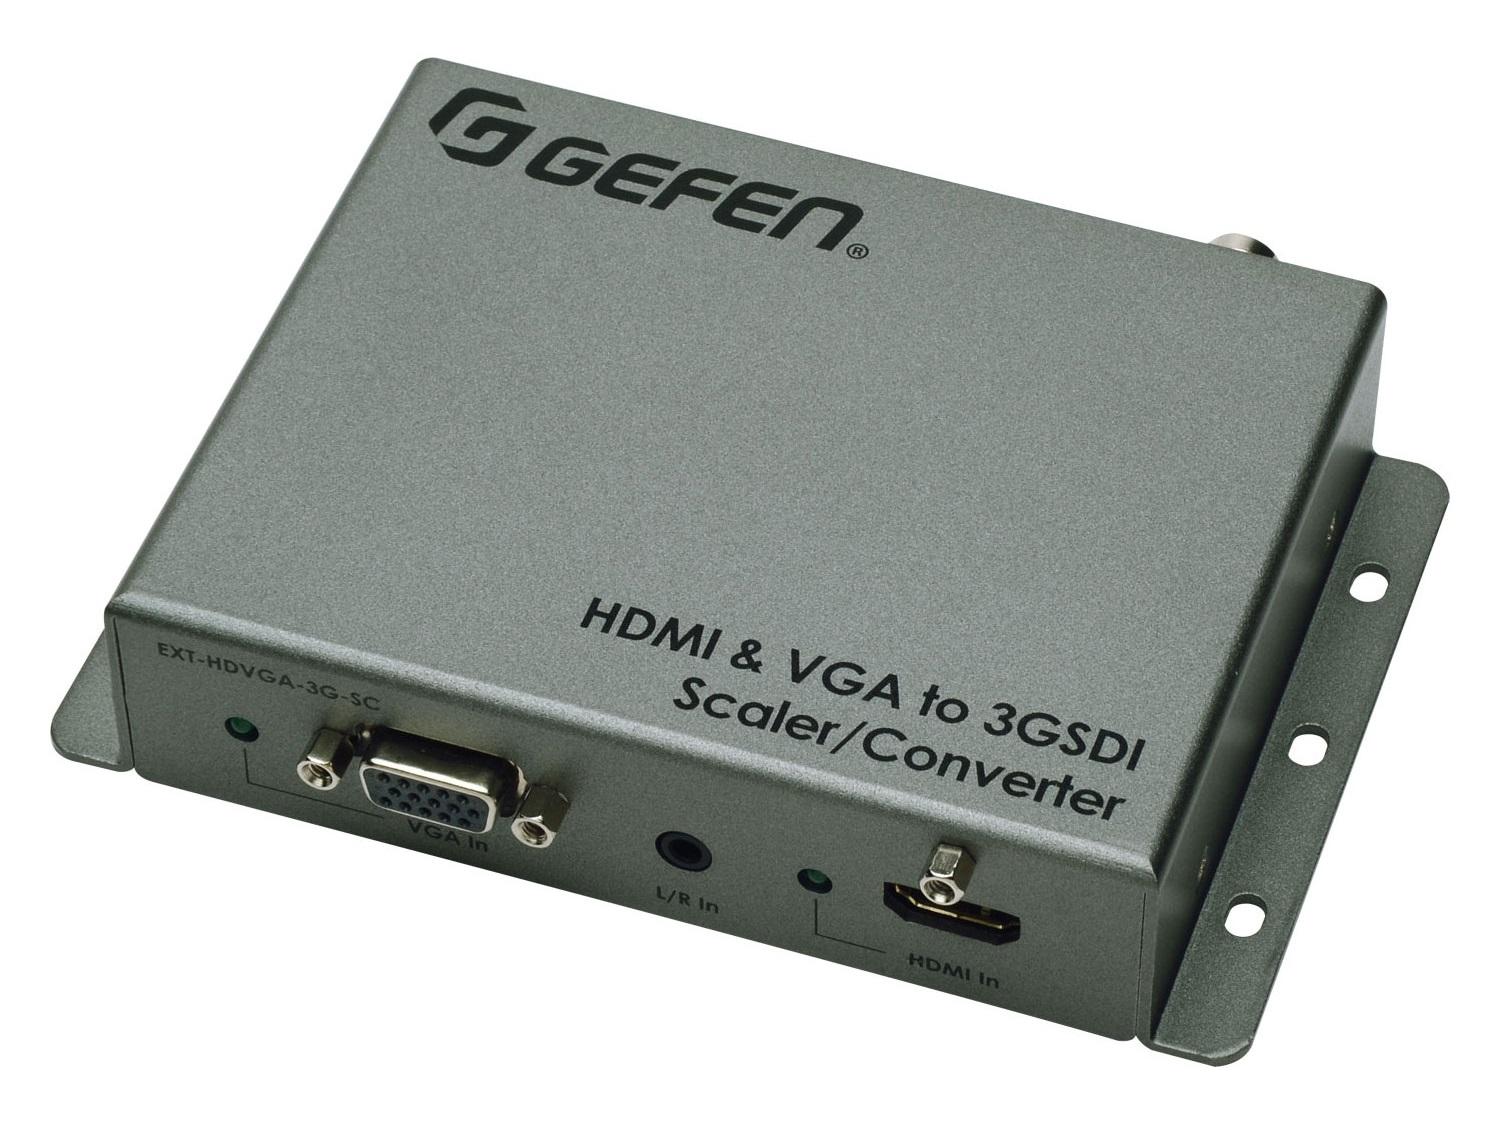 EXT-HDVGA-3G-SC HDMI and VGA/Audio to 3GSDI Scaler / Converter by Gefen